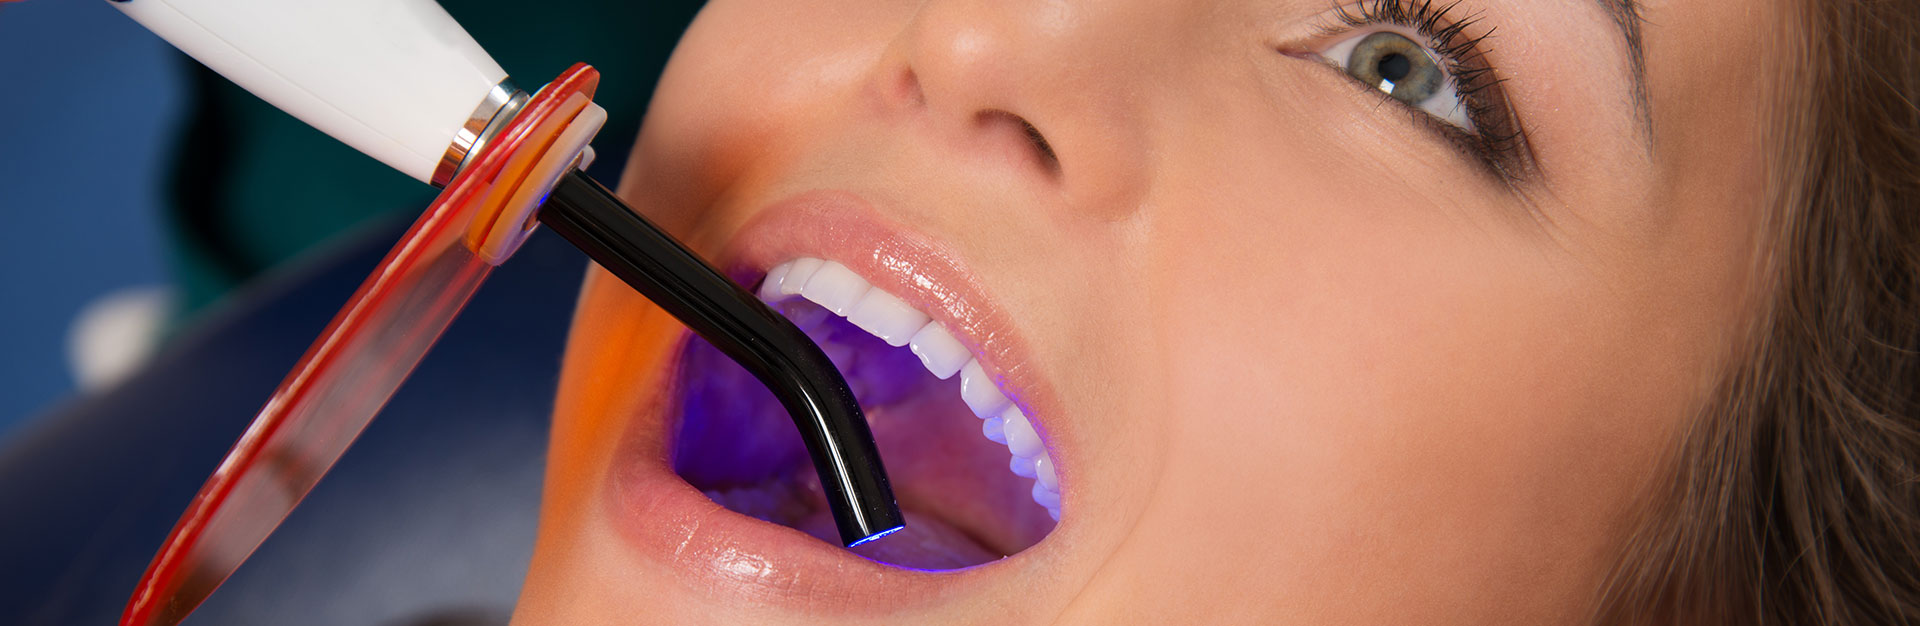 A woman is having laser dental treatment